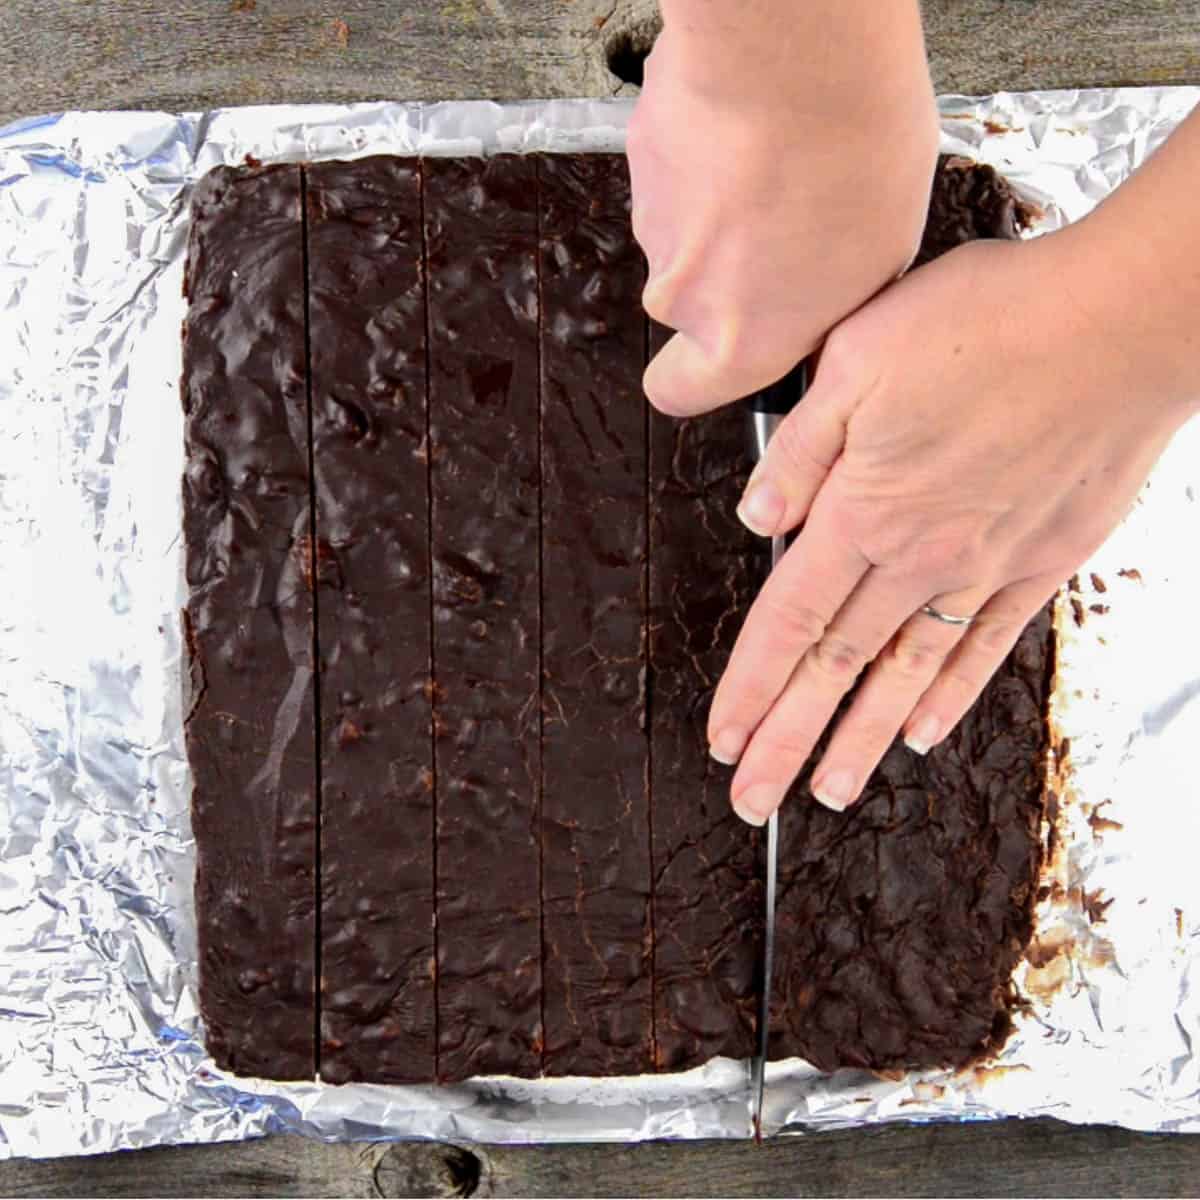 Cutting homemade chocolate fudge into squares.